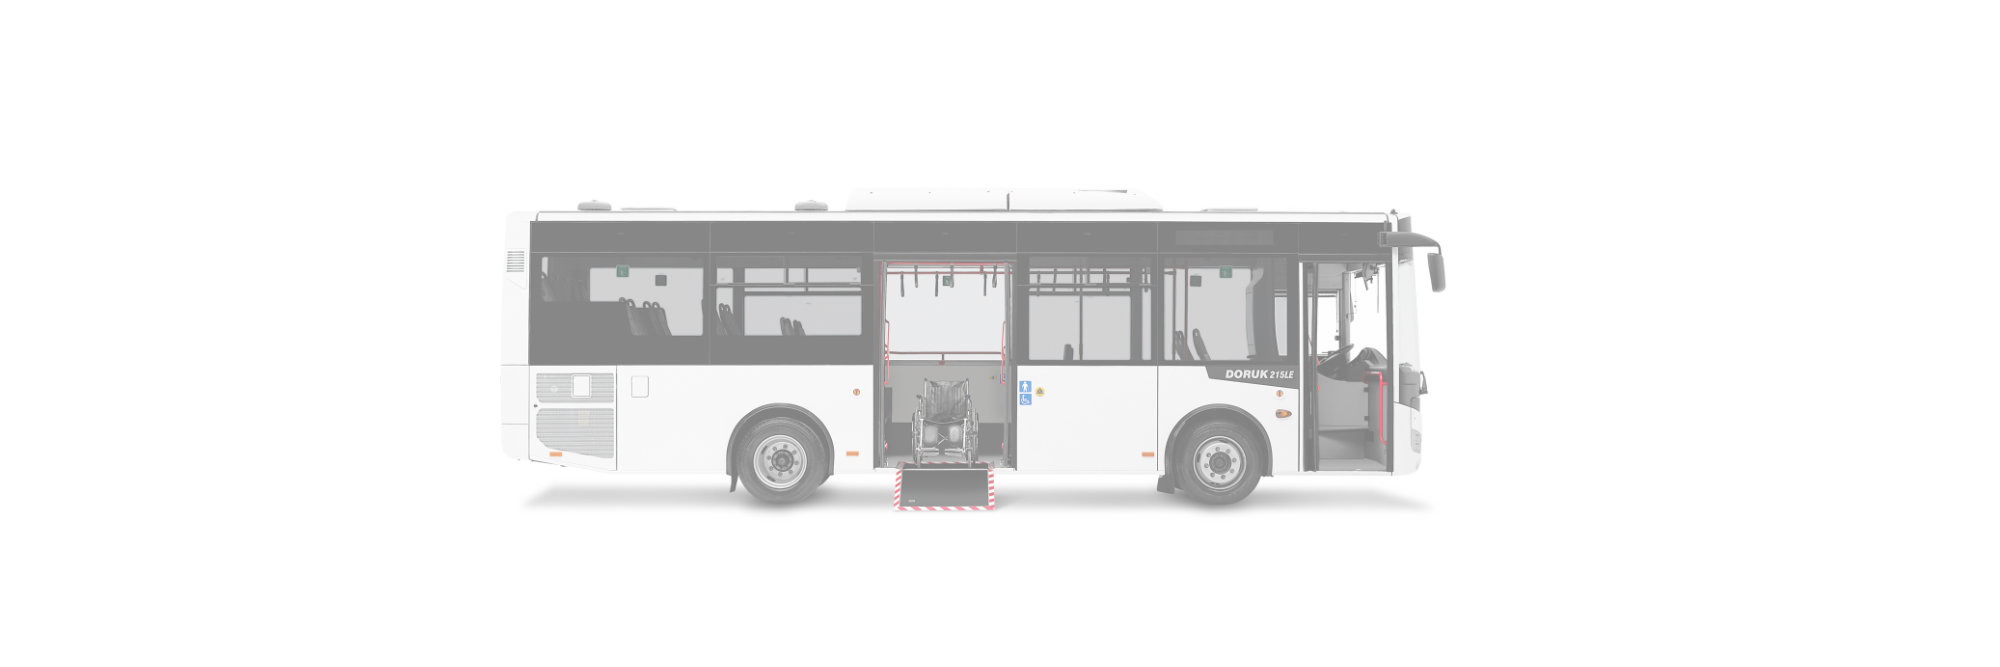 Decopan Passenger bus, minibus, midibus grp sheets